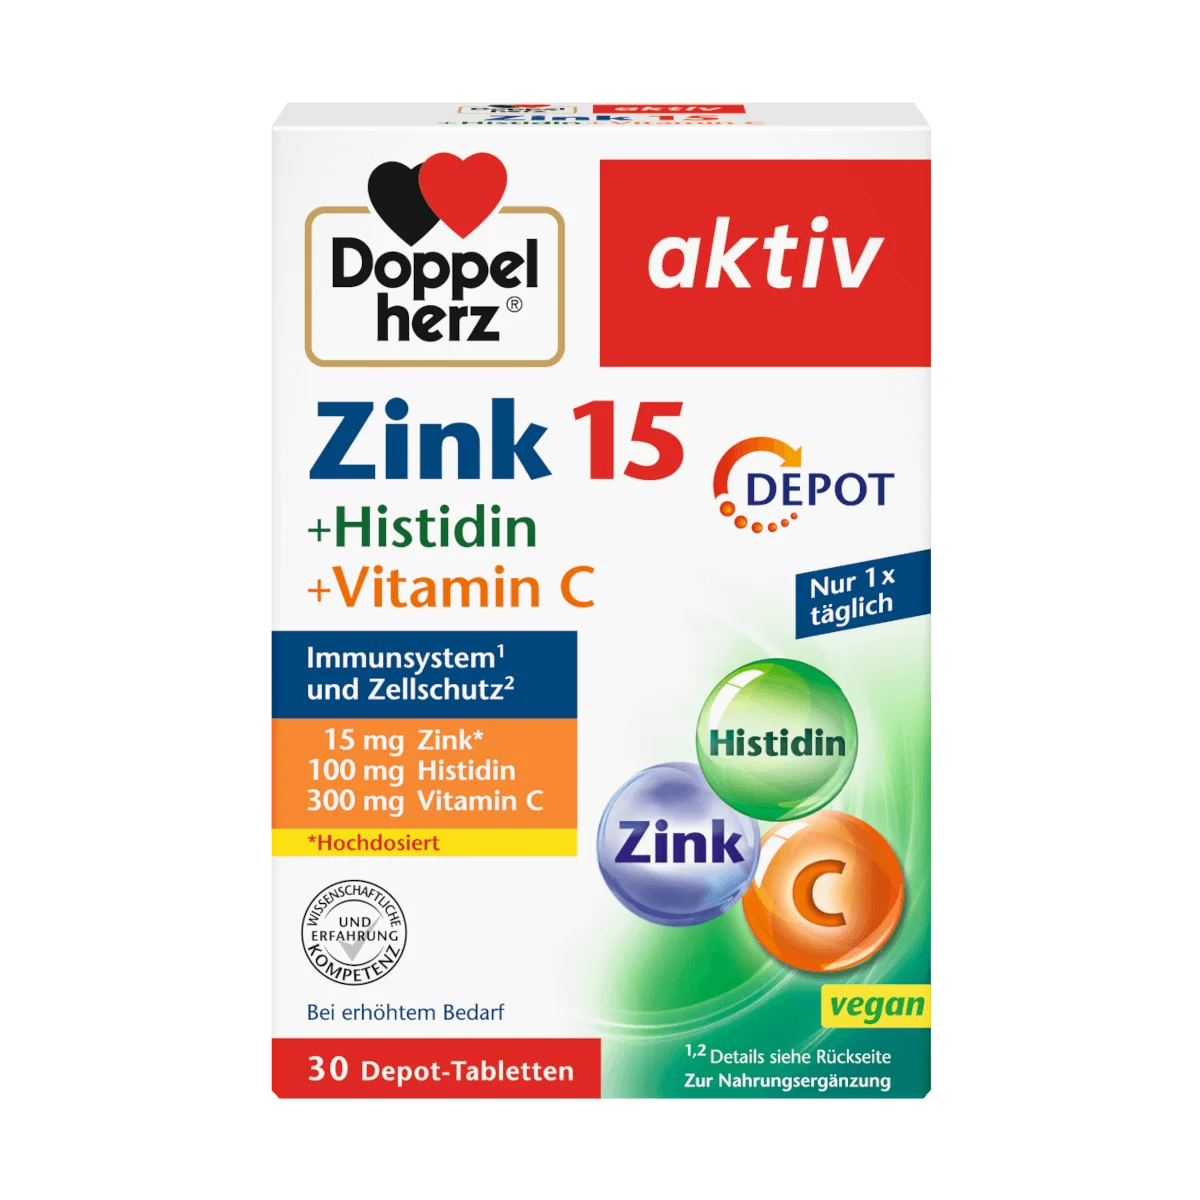 Doppelherz Zink 15 + Histidin + Vitamin C Depot, 30 Tbl